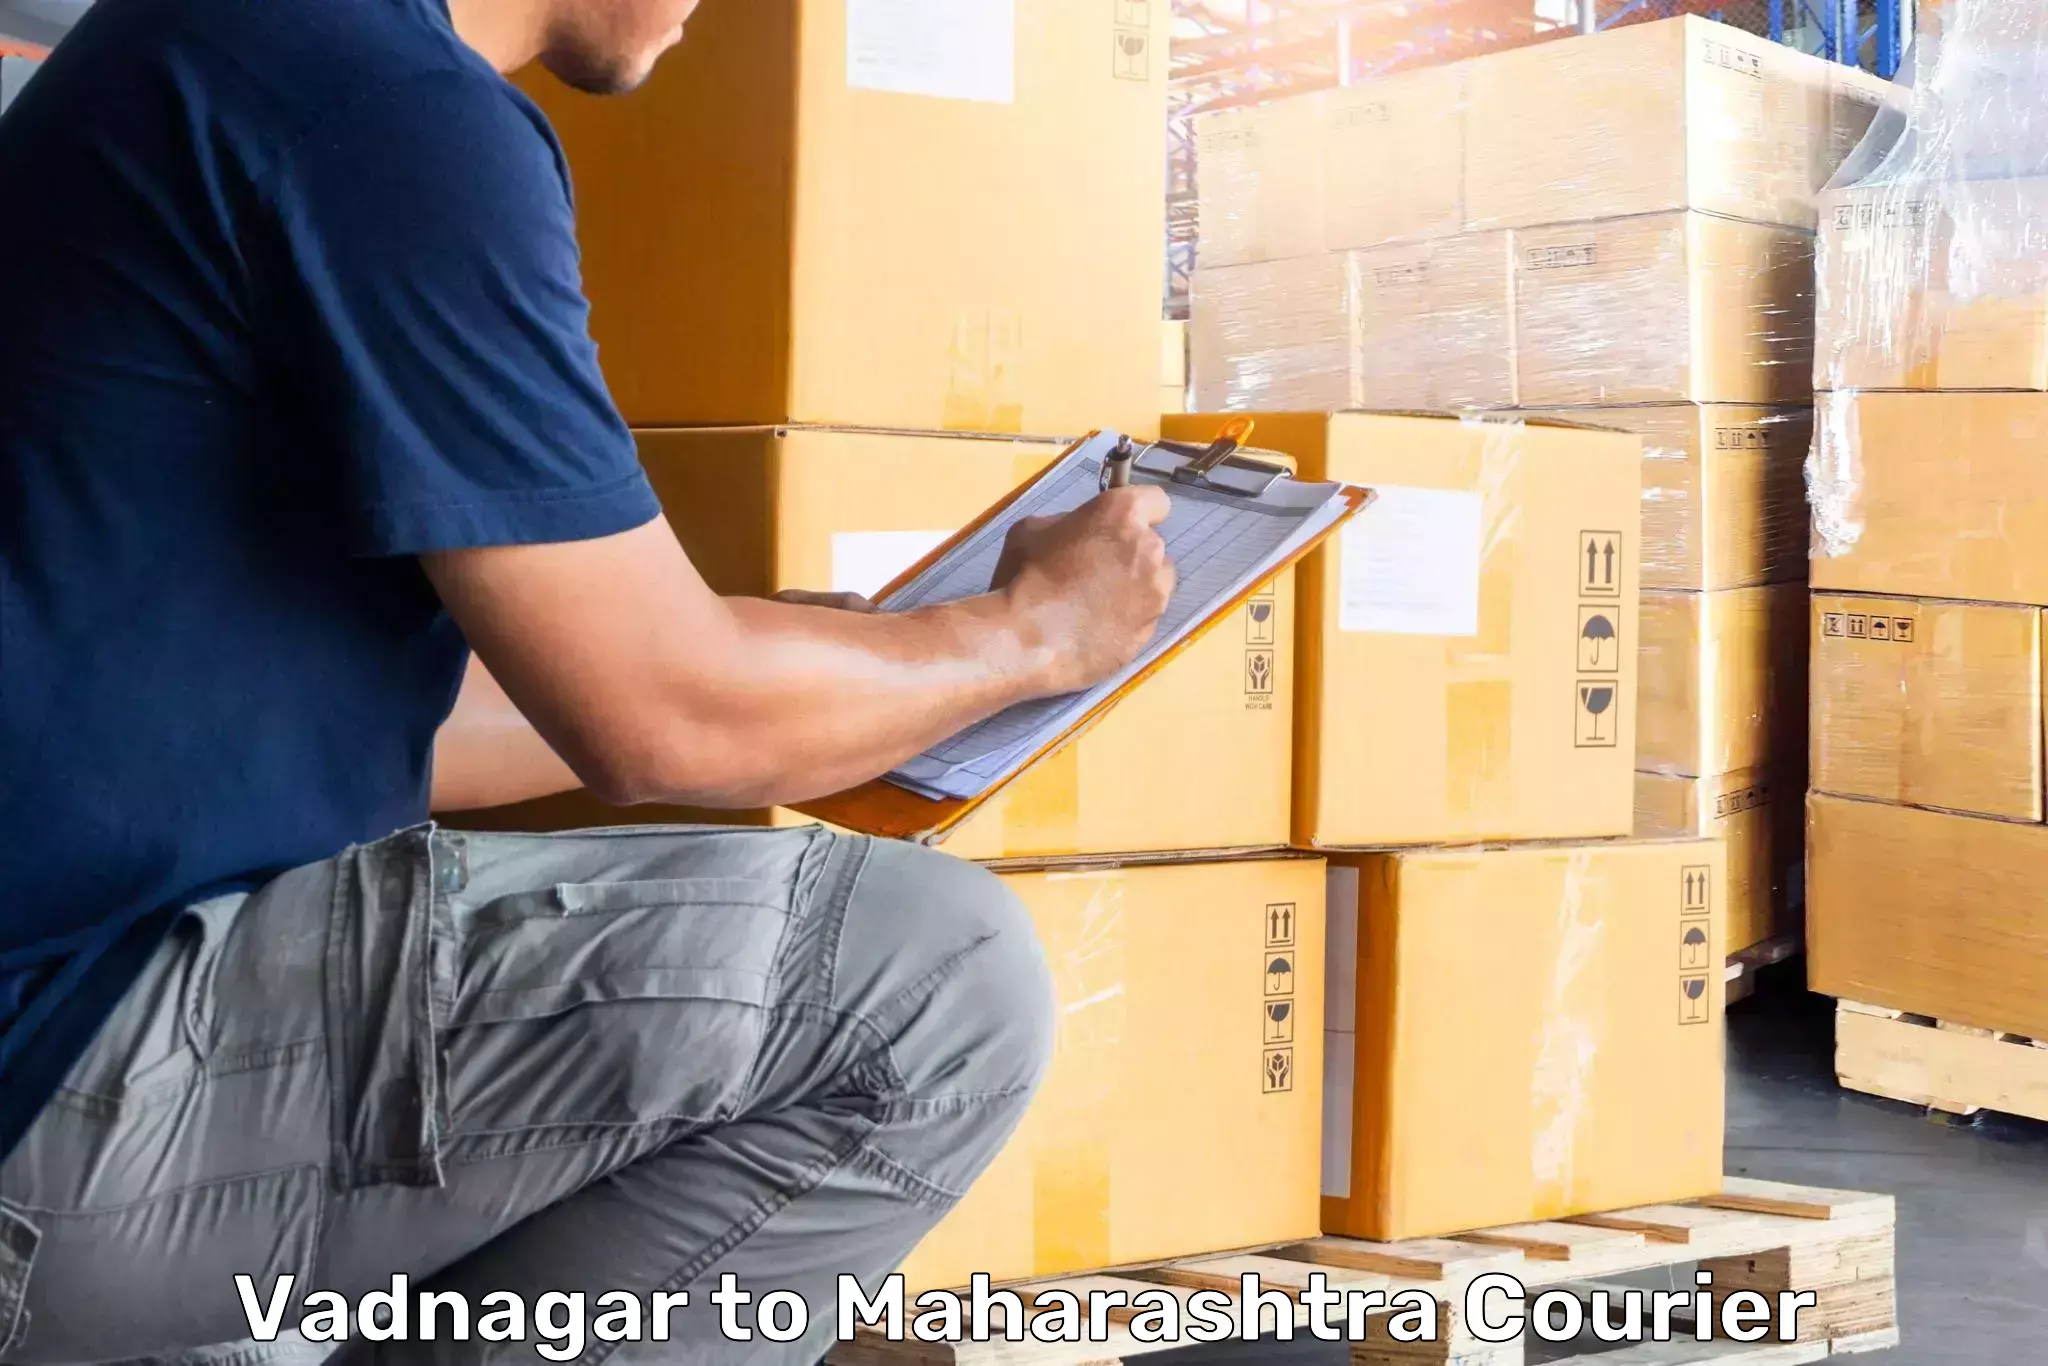 Luggage delivery system Vadnagar to Kalyan